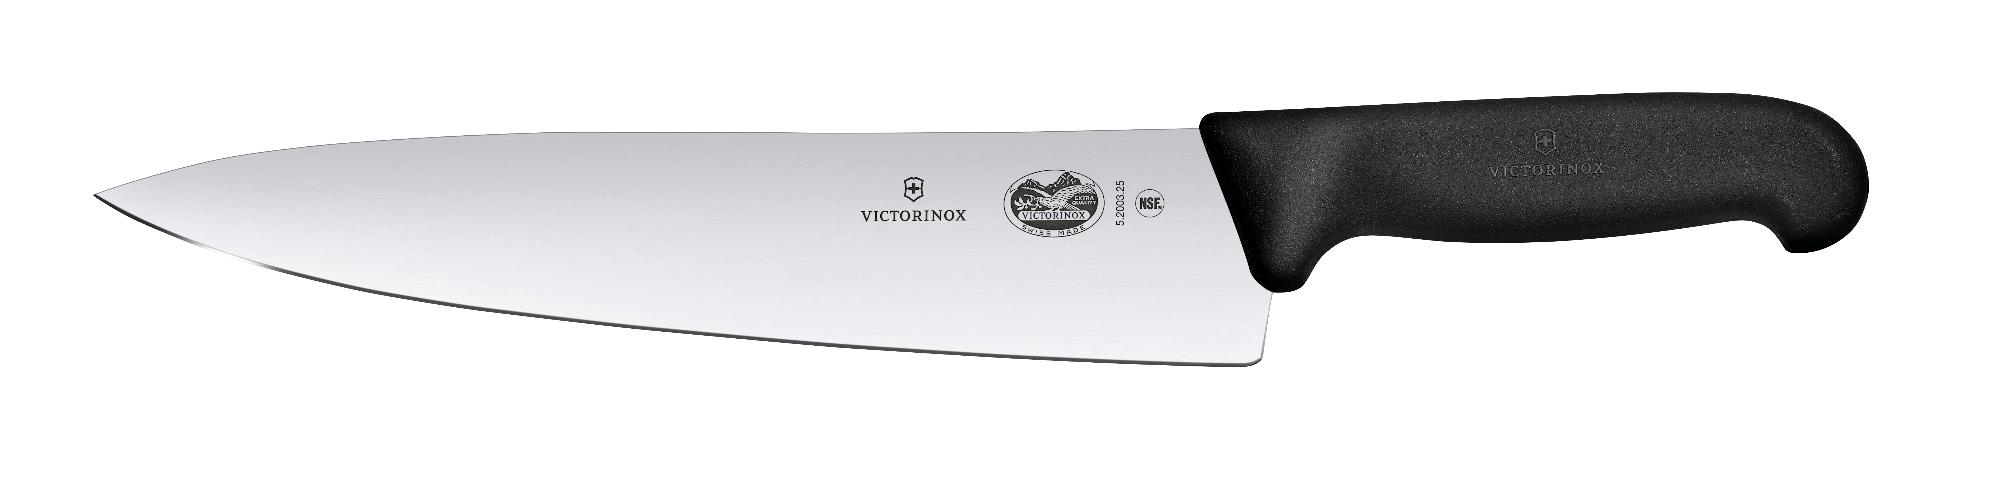 Fibrox kitchen knife, wide blade, 25 cm - black